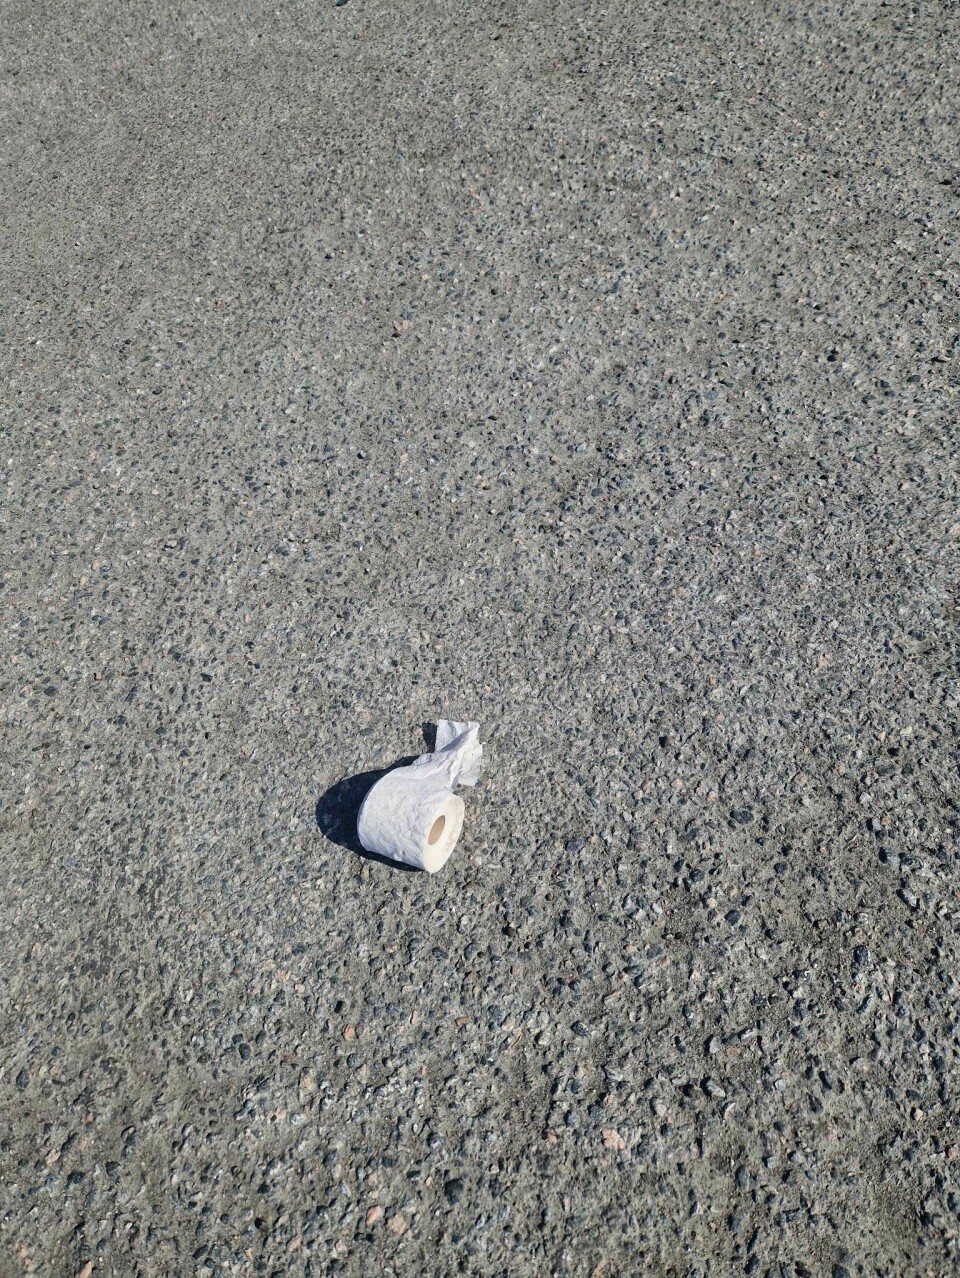 En dorull ligger på asfalten